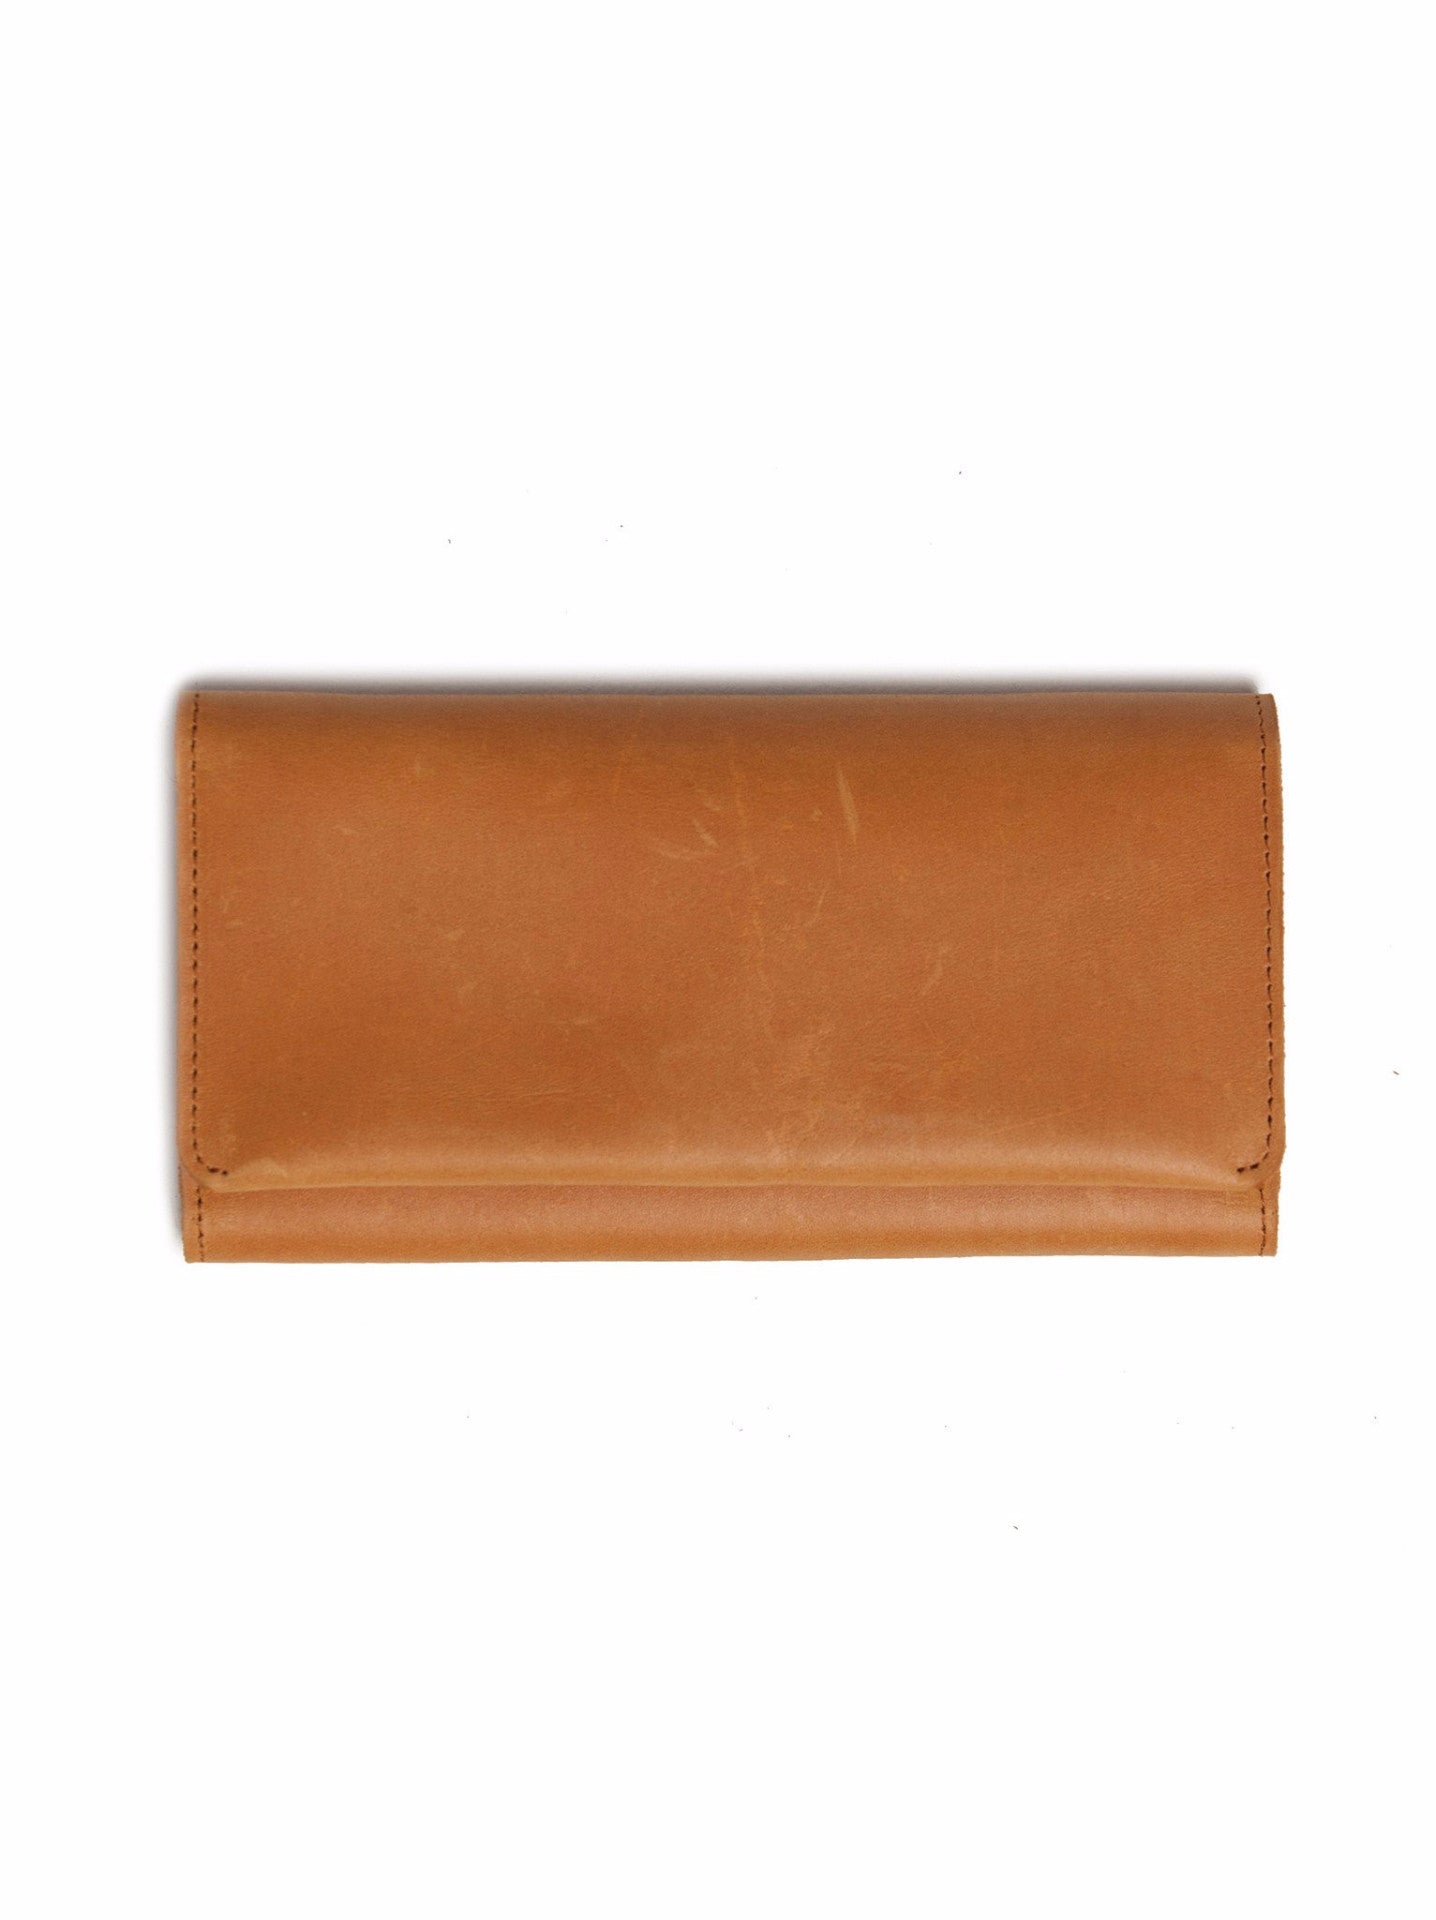 cheap tan leather wallet fashionable cognac debre wallet studio 3:19